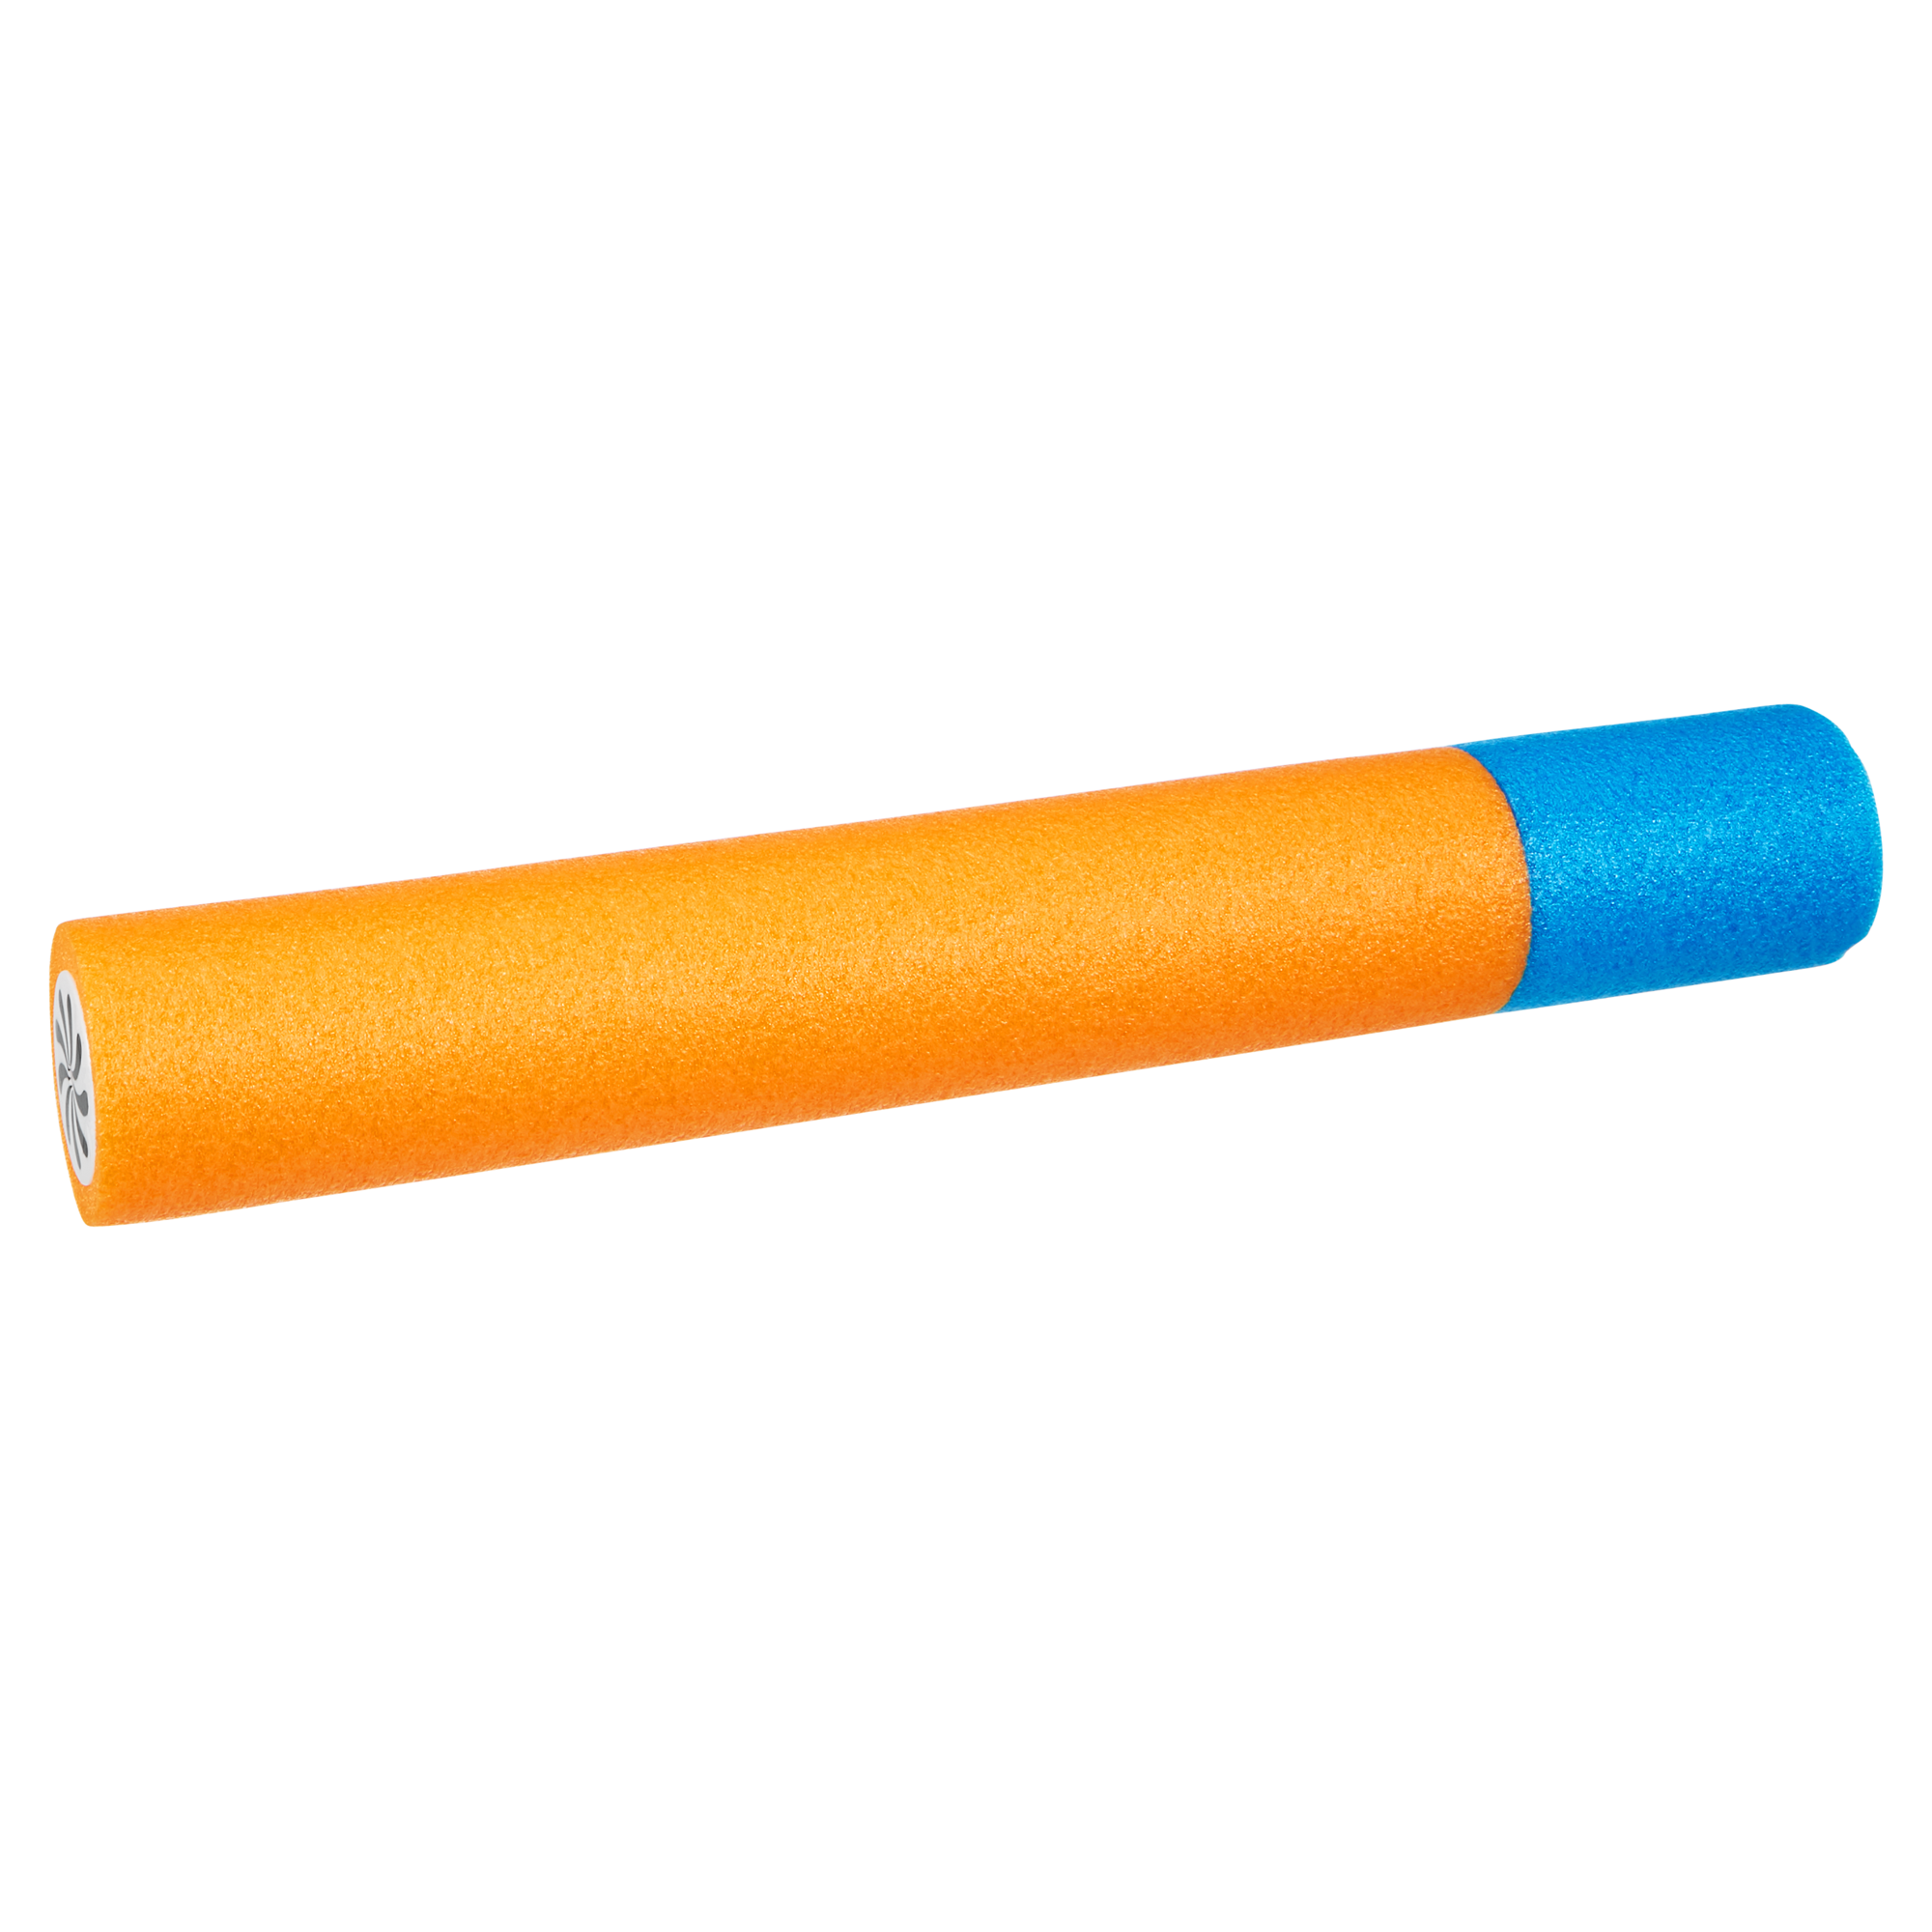 Wasserkanone Mini Eliminator blau/orange Ø 5 x 33 cm + product picture